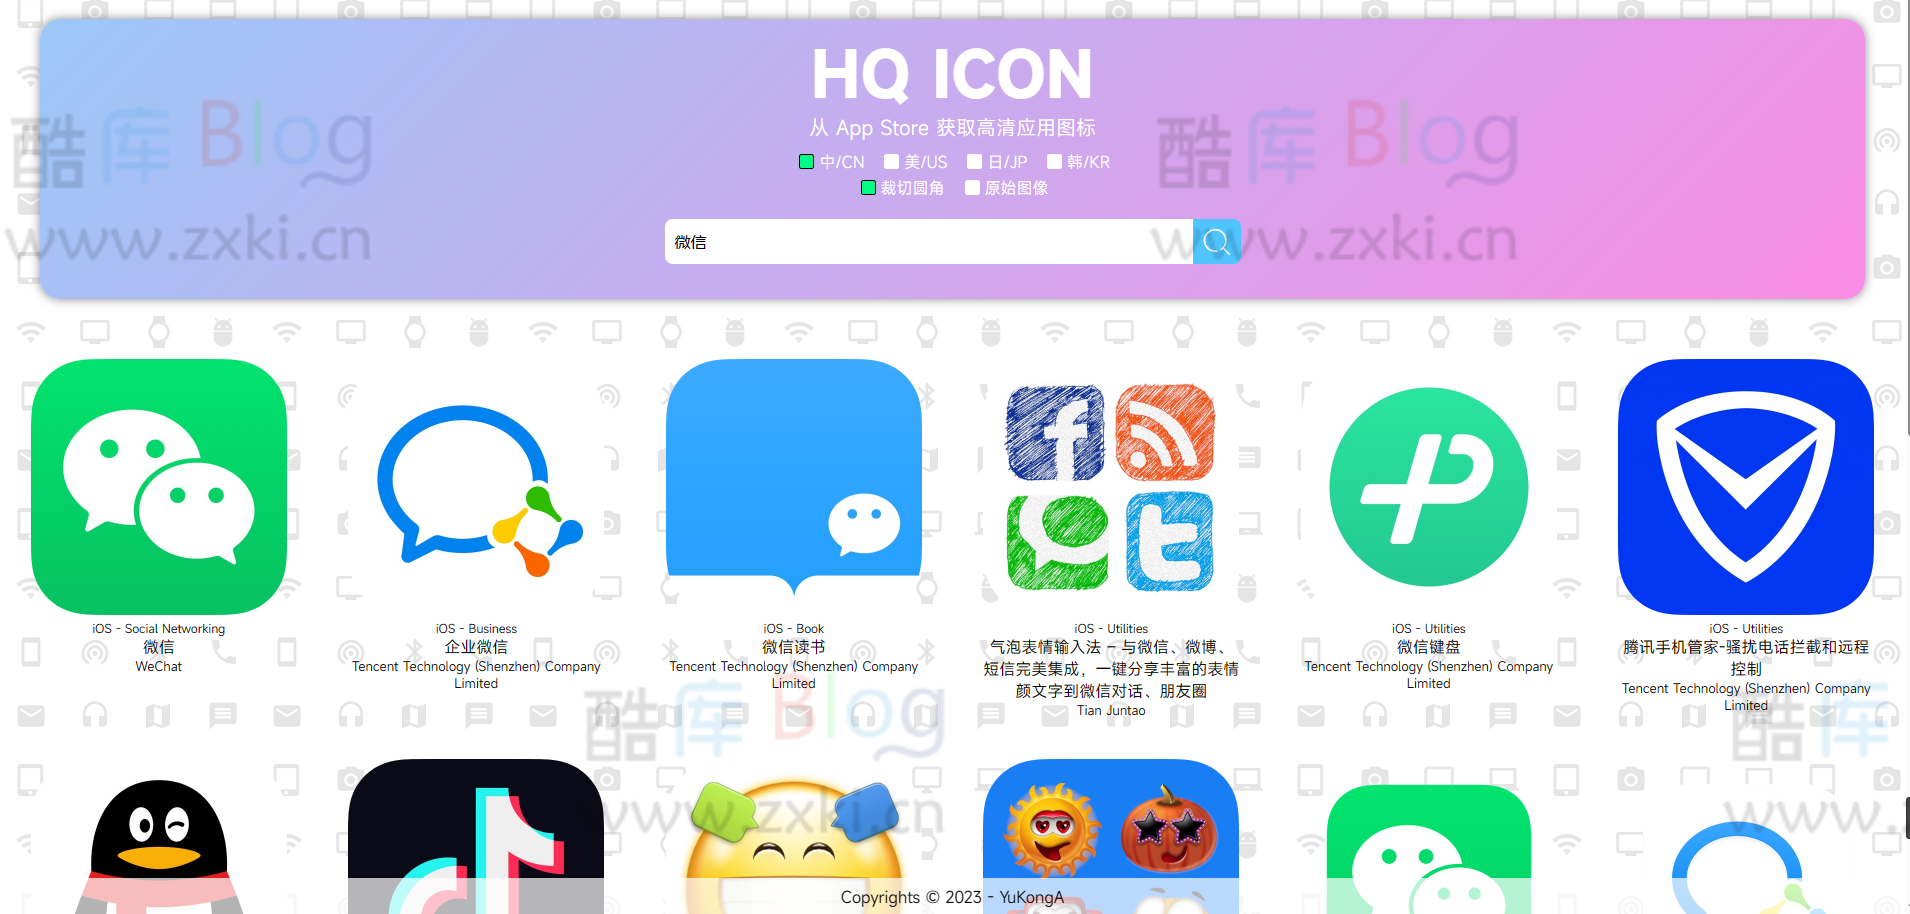 HQ ICON – 从 App Store 获取高清应用图标 第2张插图